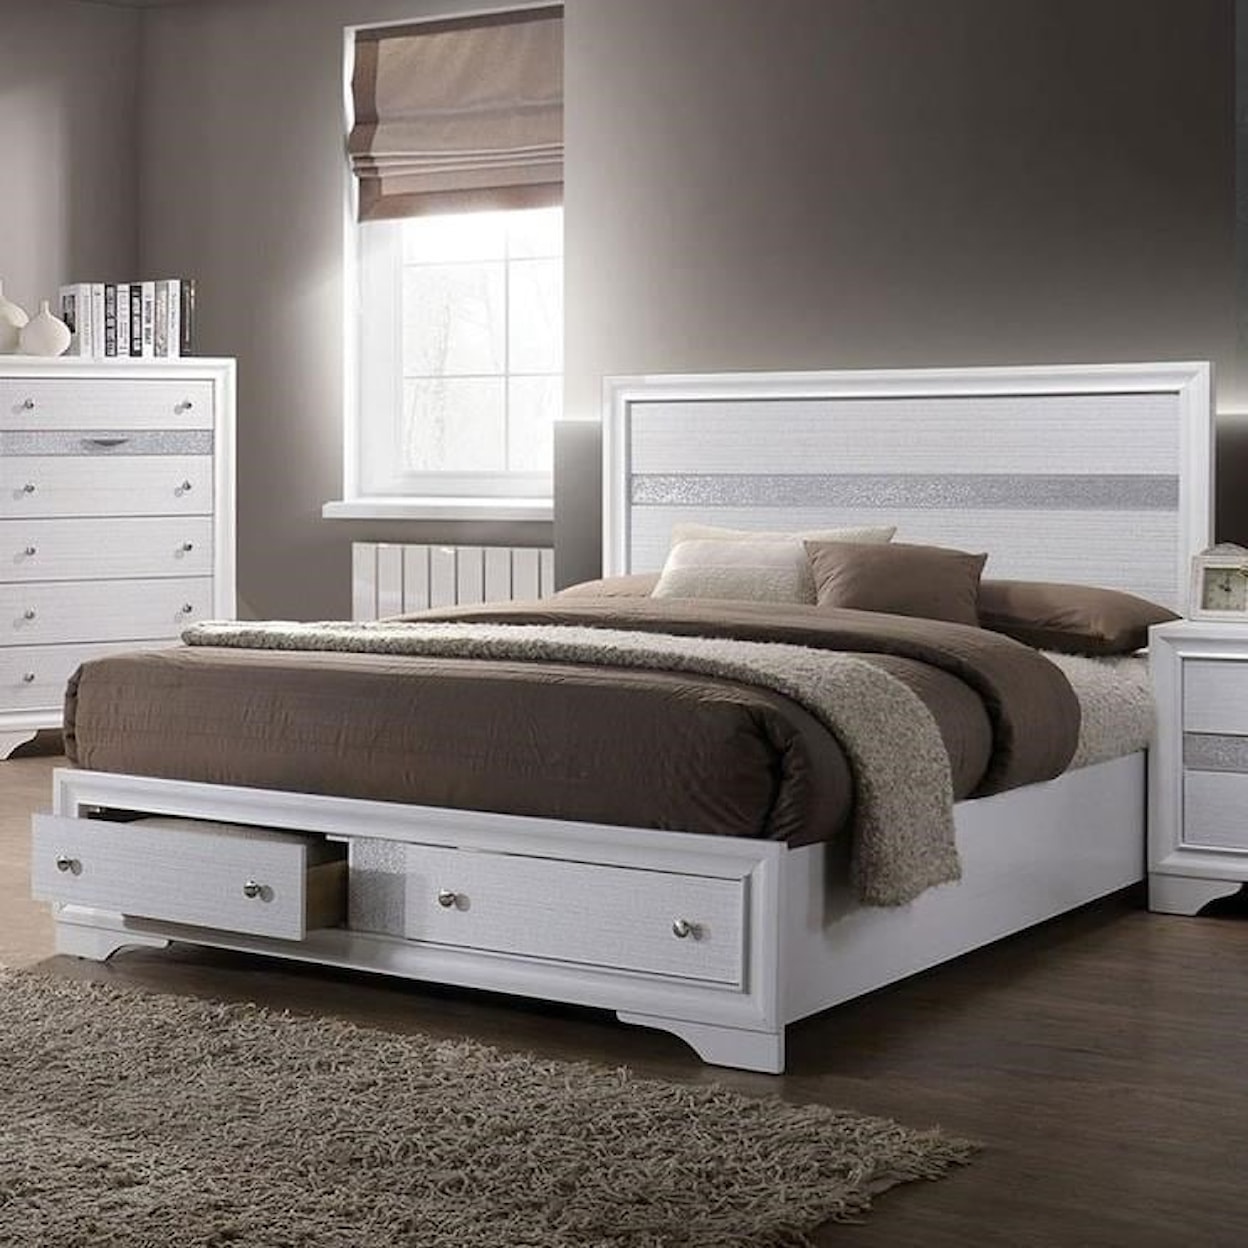 Furniture of America Chrissy Full Bed